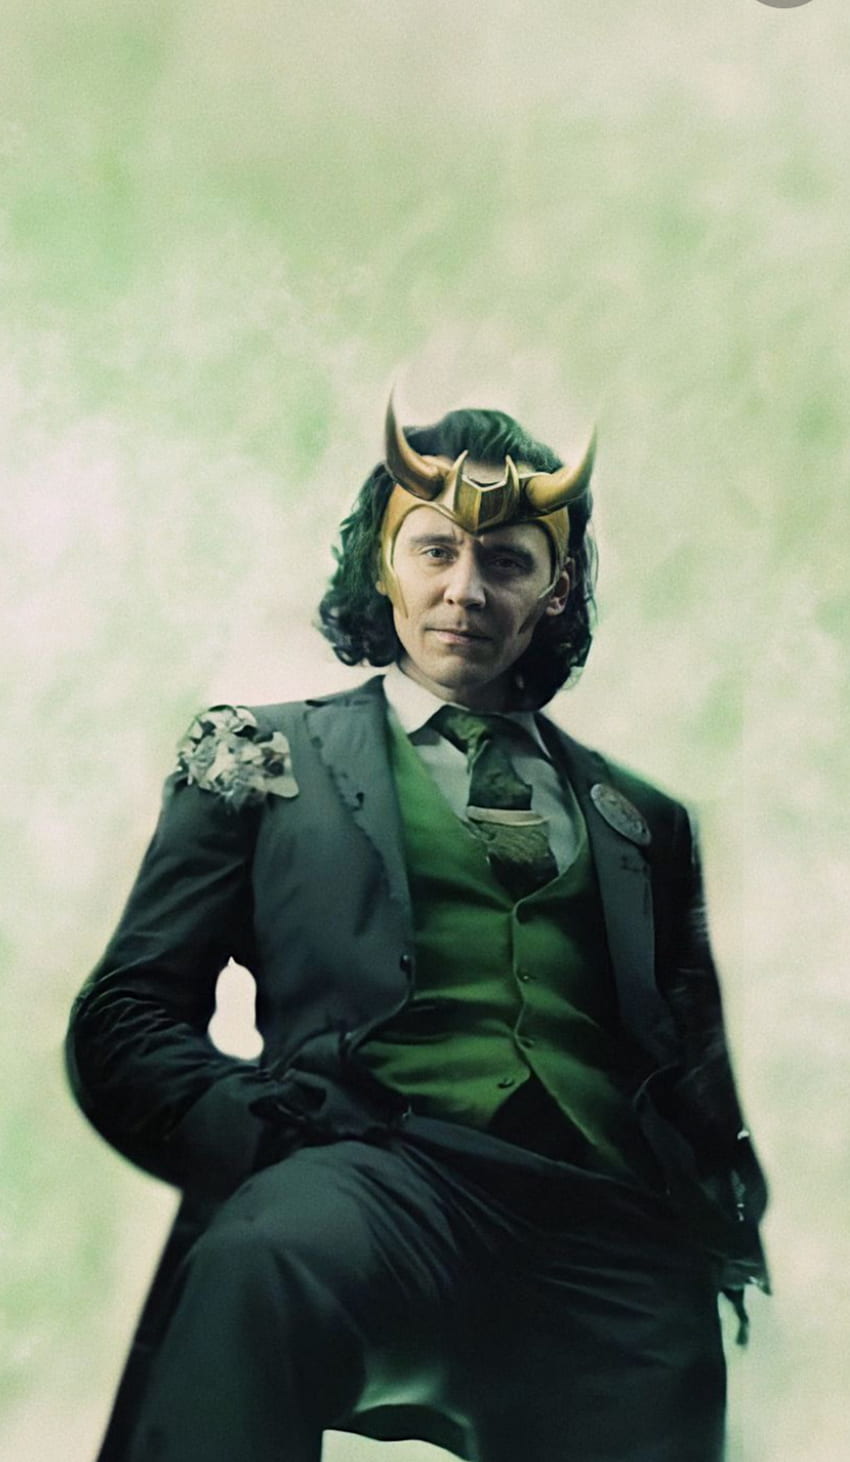 Presidente Loki, programa de televisión fondo de pantalla del teléfono